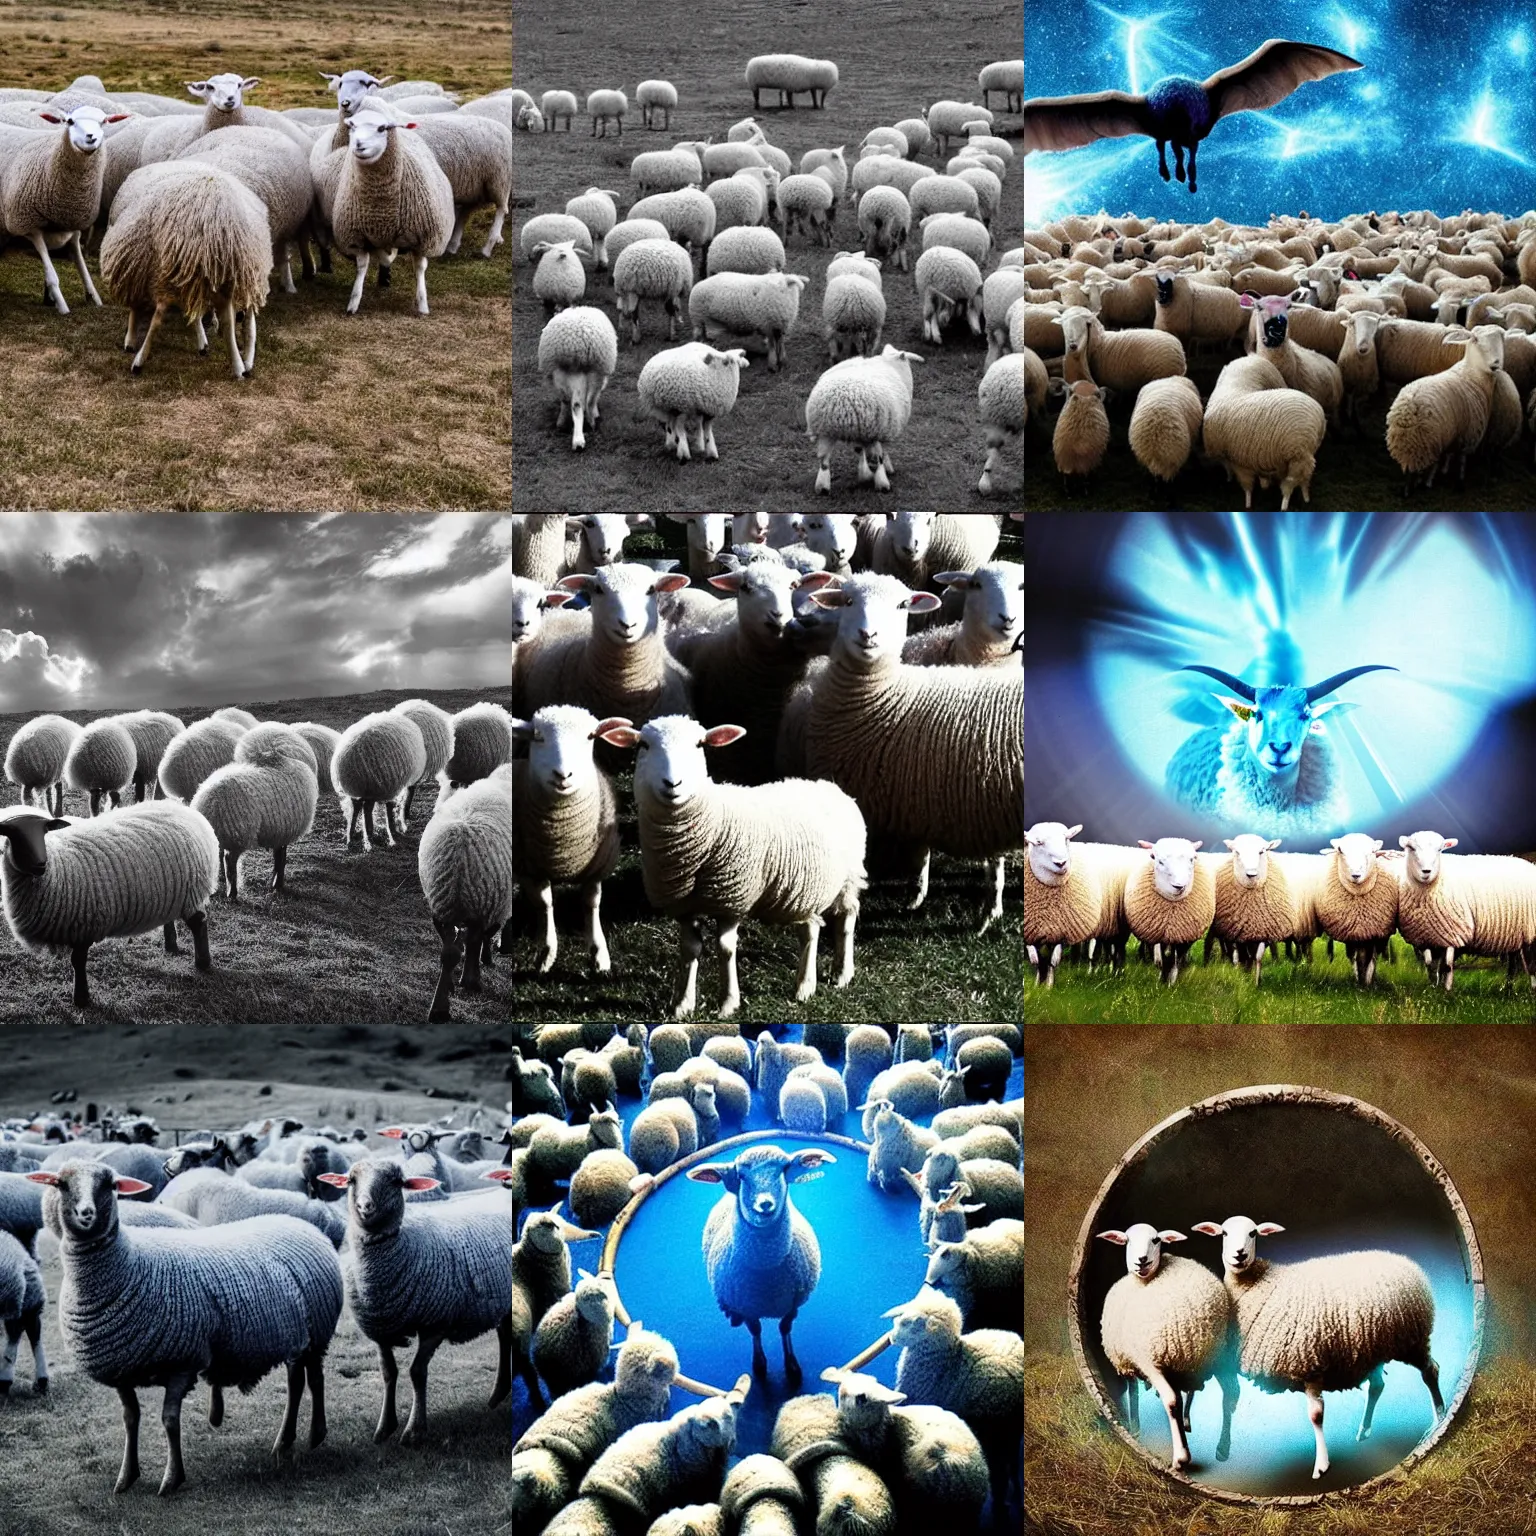 Prompt: surreal photo of sheep using stargate demonic devil spirit spirit blue